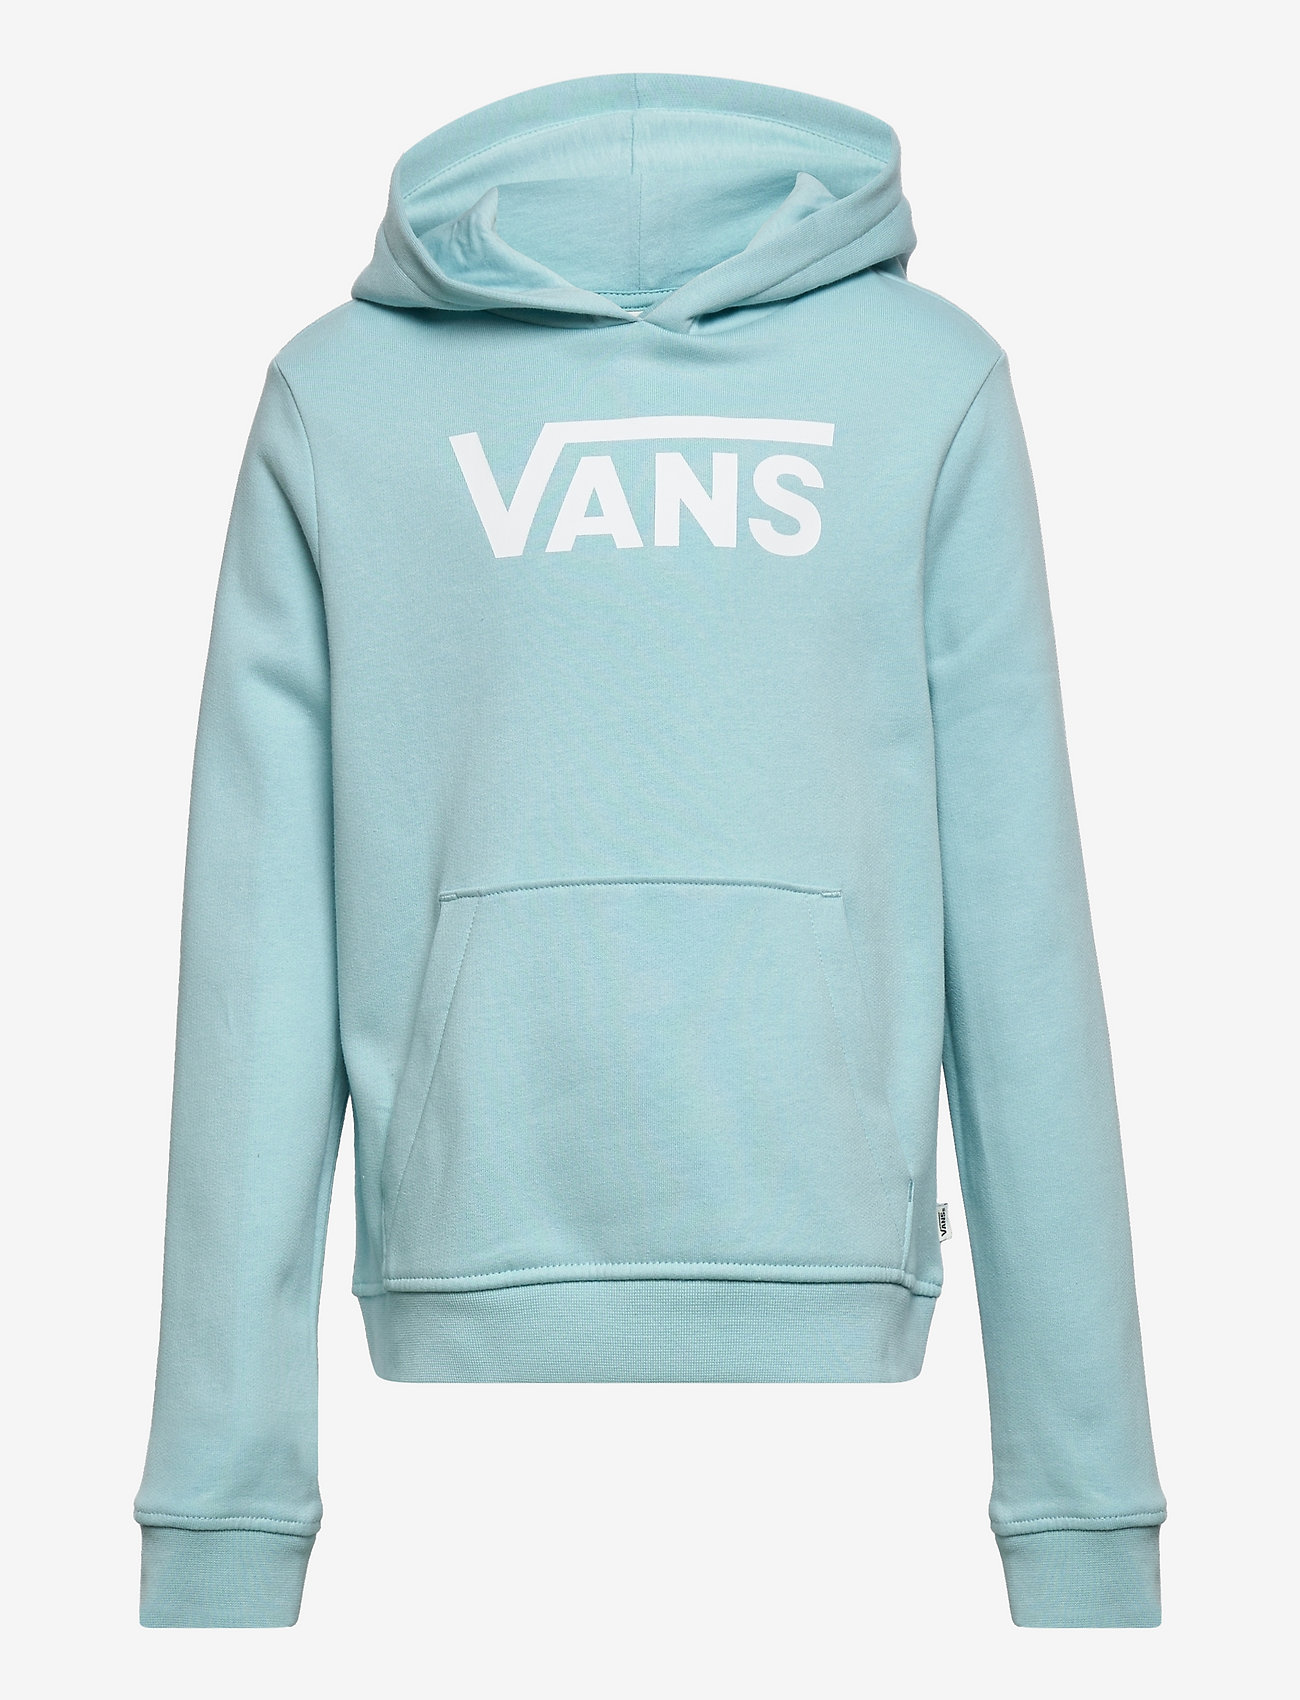 vans hoodies for girls